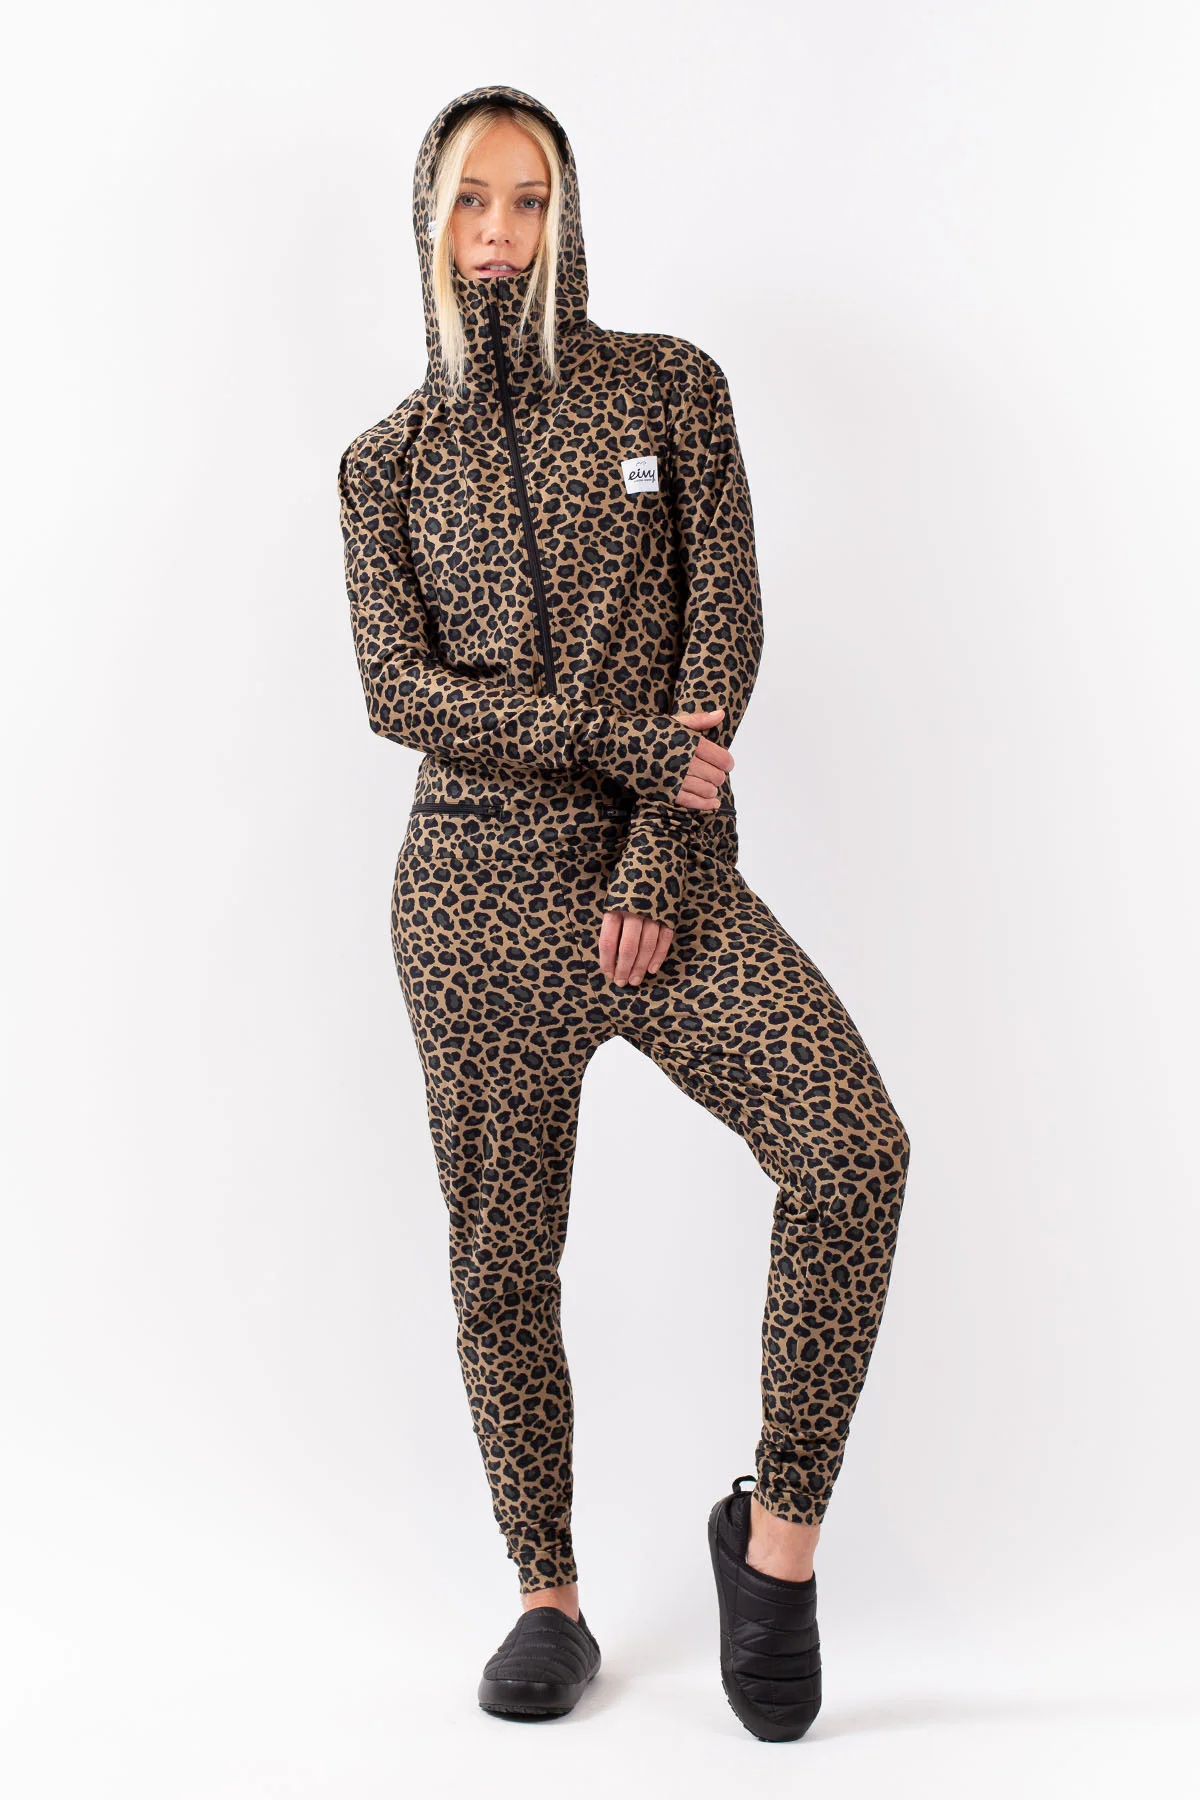 Eivy Leona Onepiece leopard